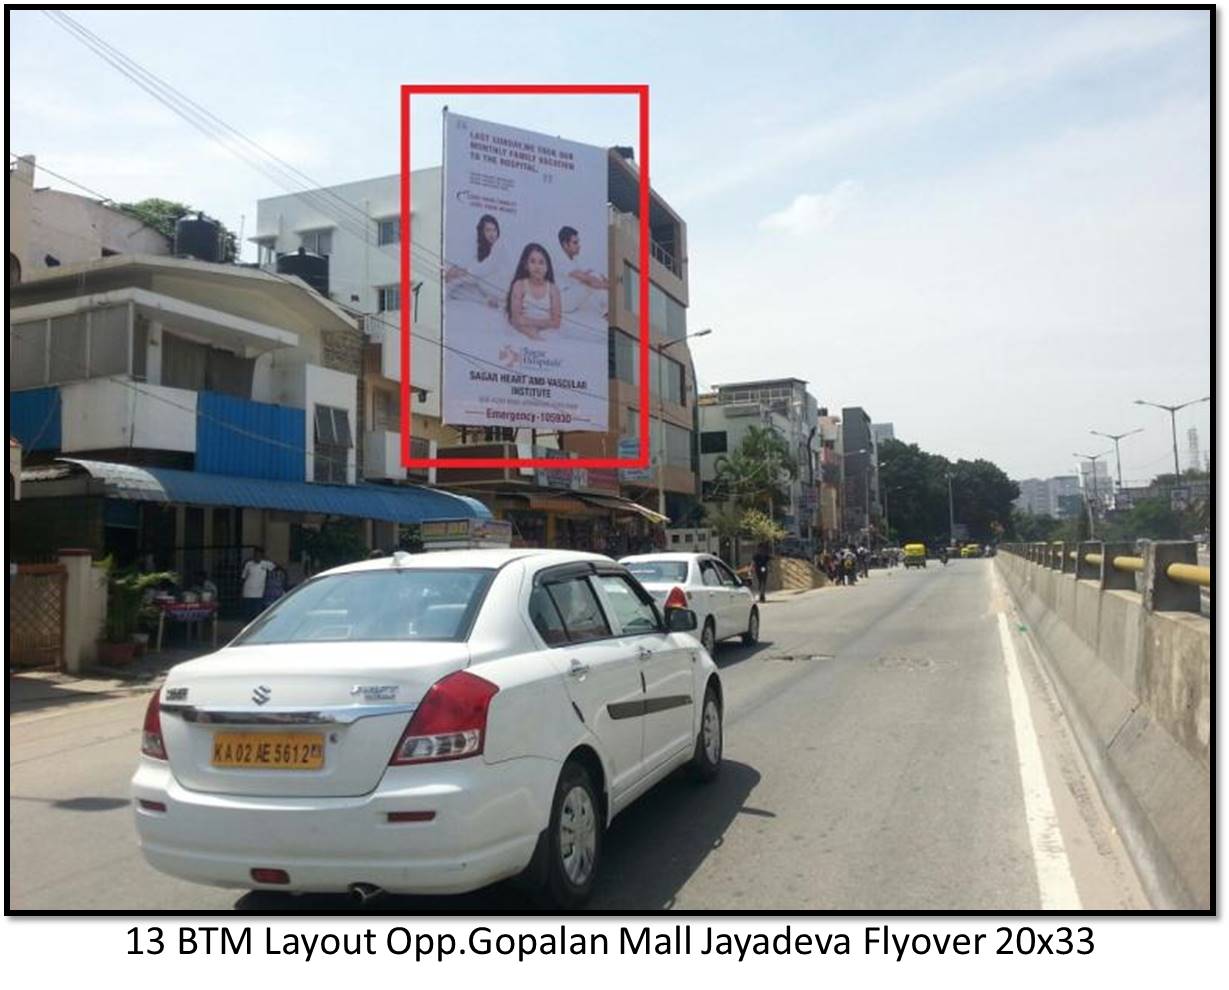 BTM Layout Opp.Gopalan Mall Jayadeva Flyover, Bengaluru